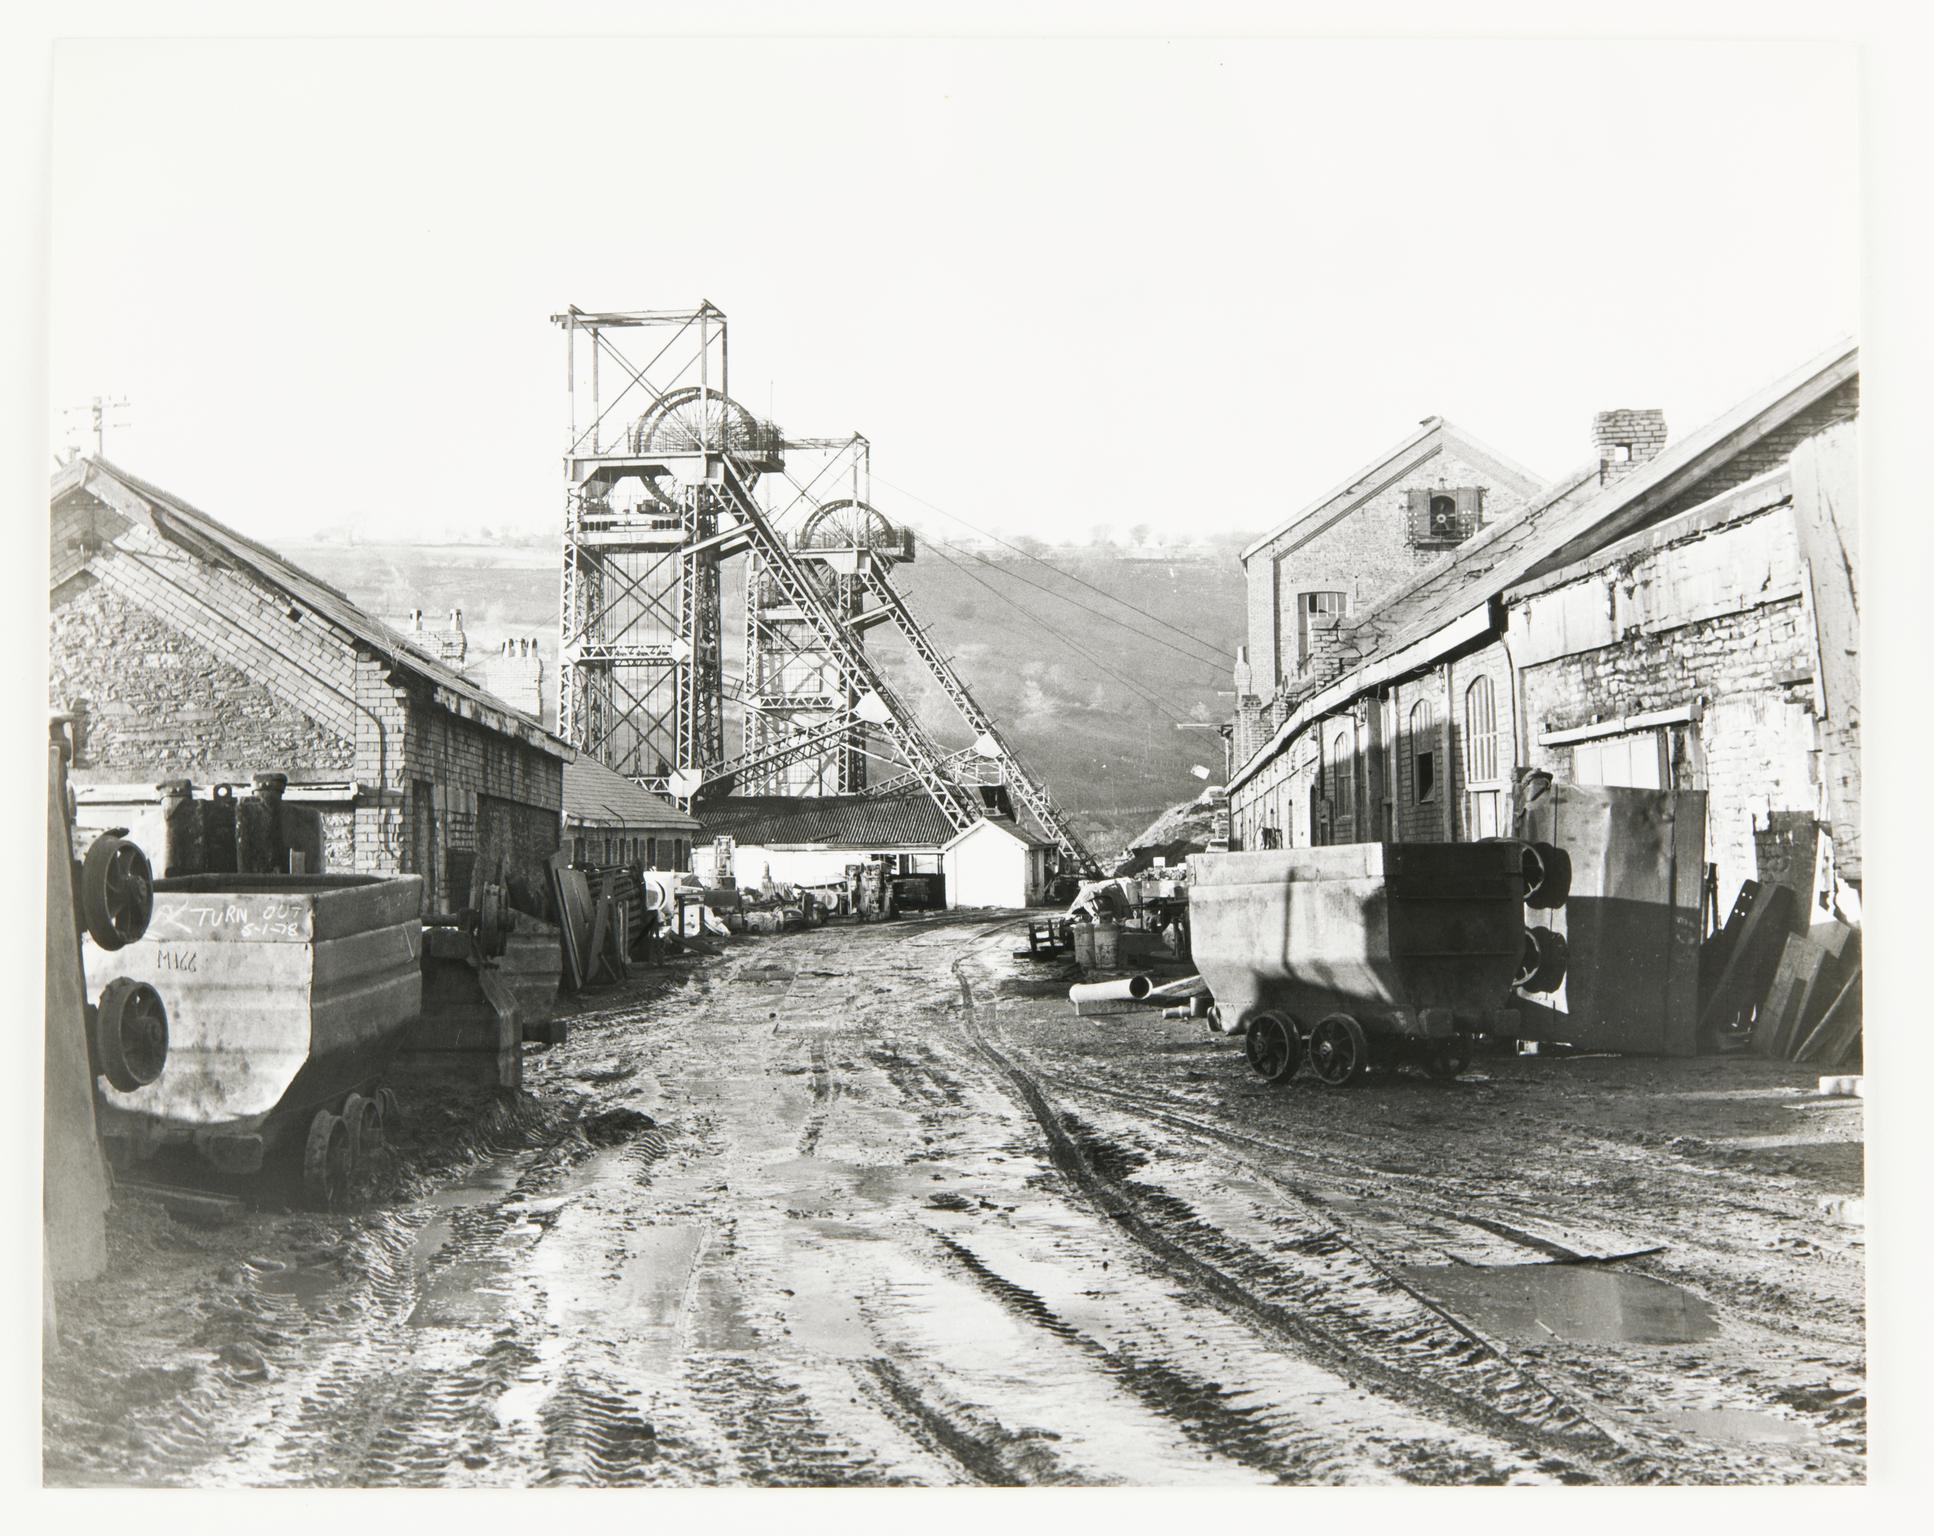 Markham Colliery, photograph